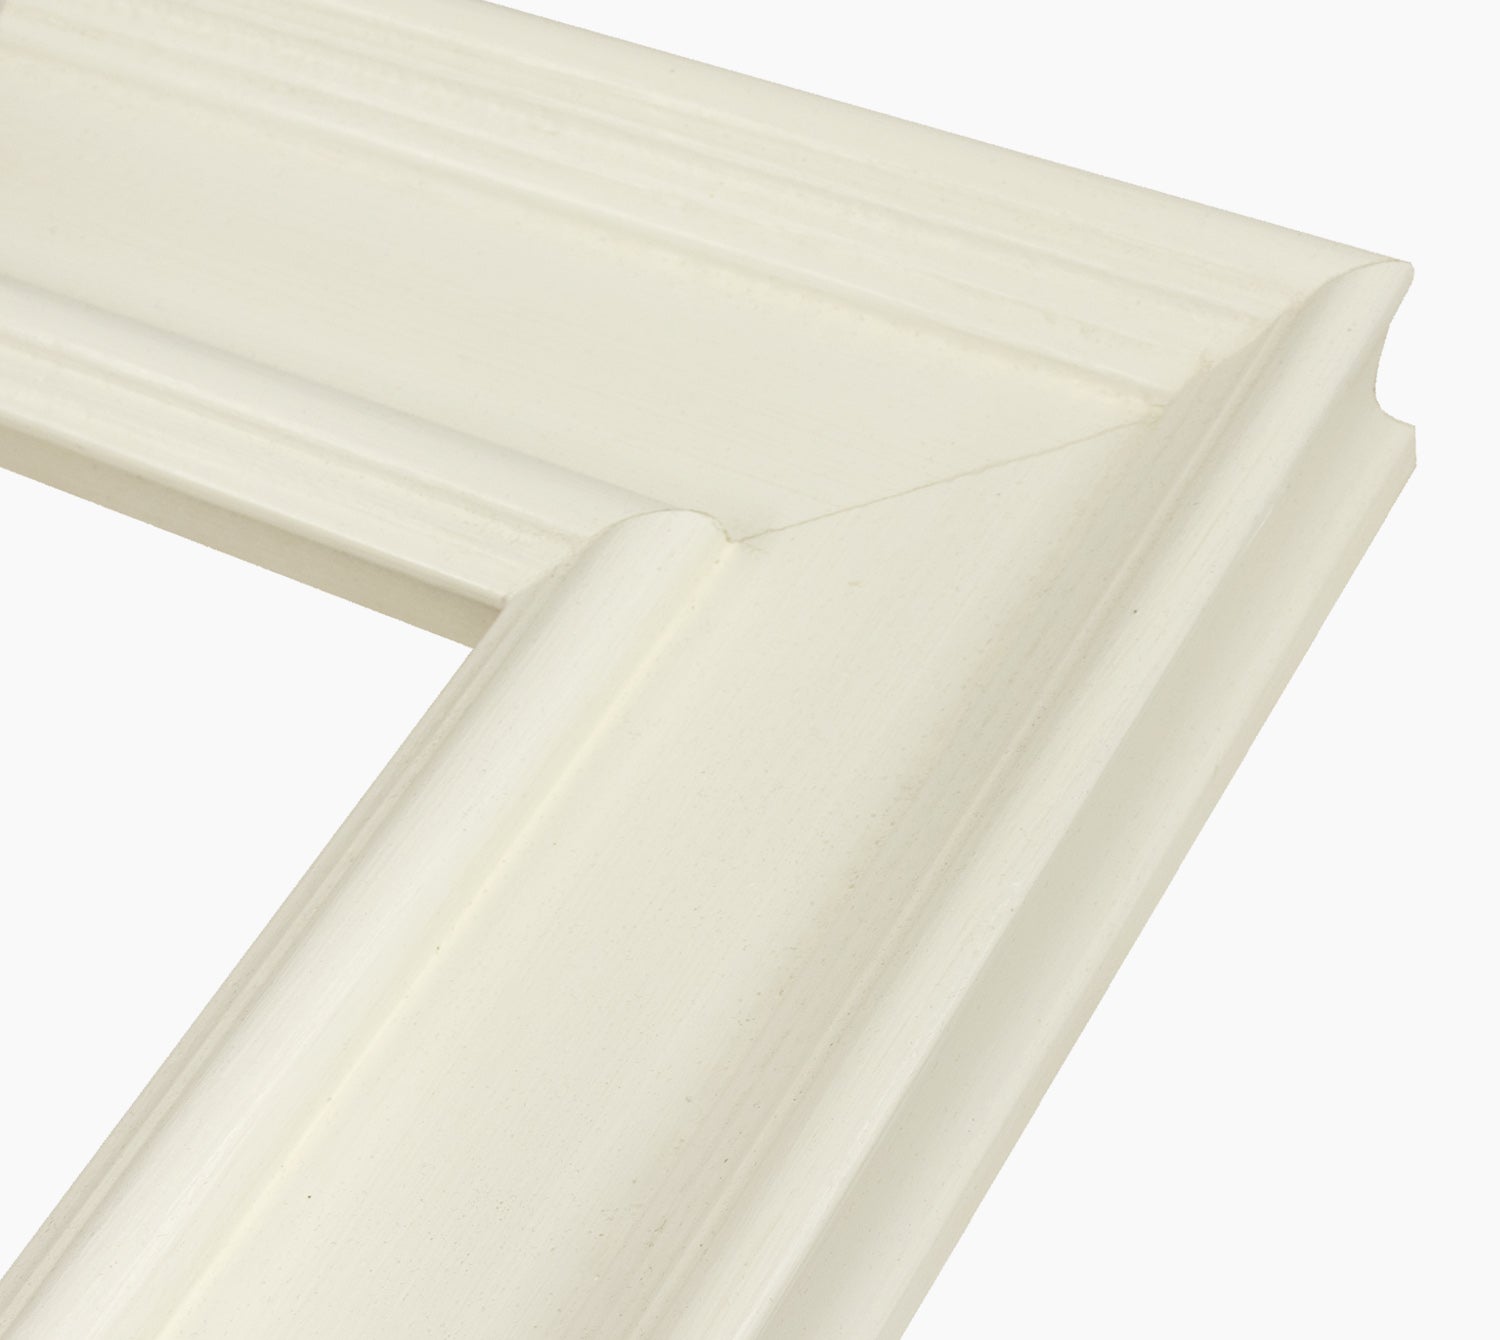 740.899 cadre en bois blanc avec de la cire mesure de profil 100x50 mm Lombarda cornici S.n.c.